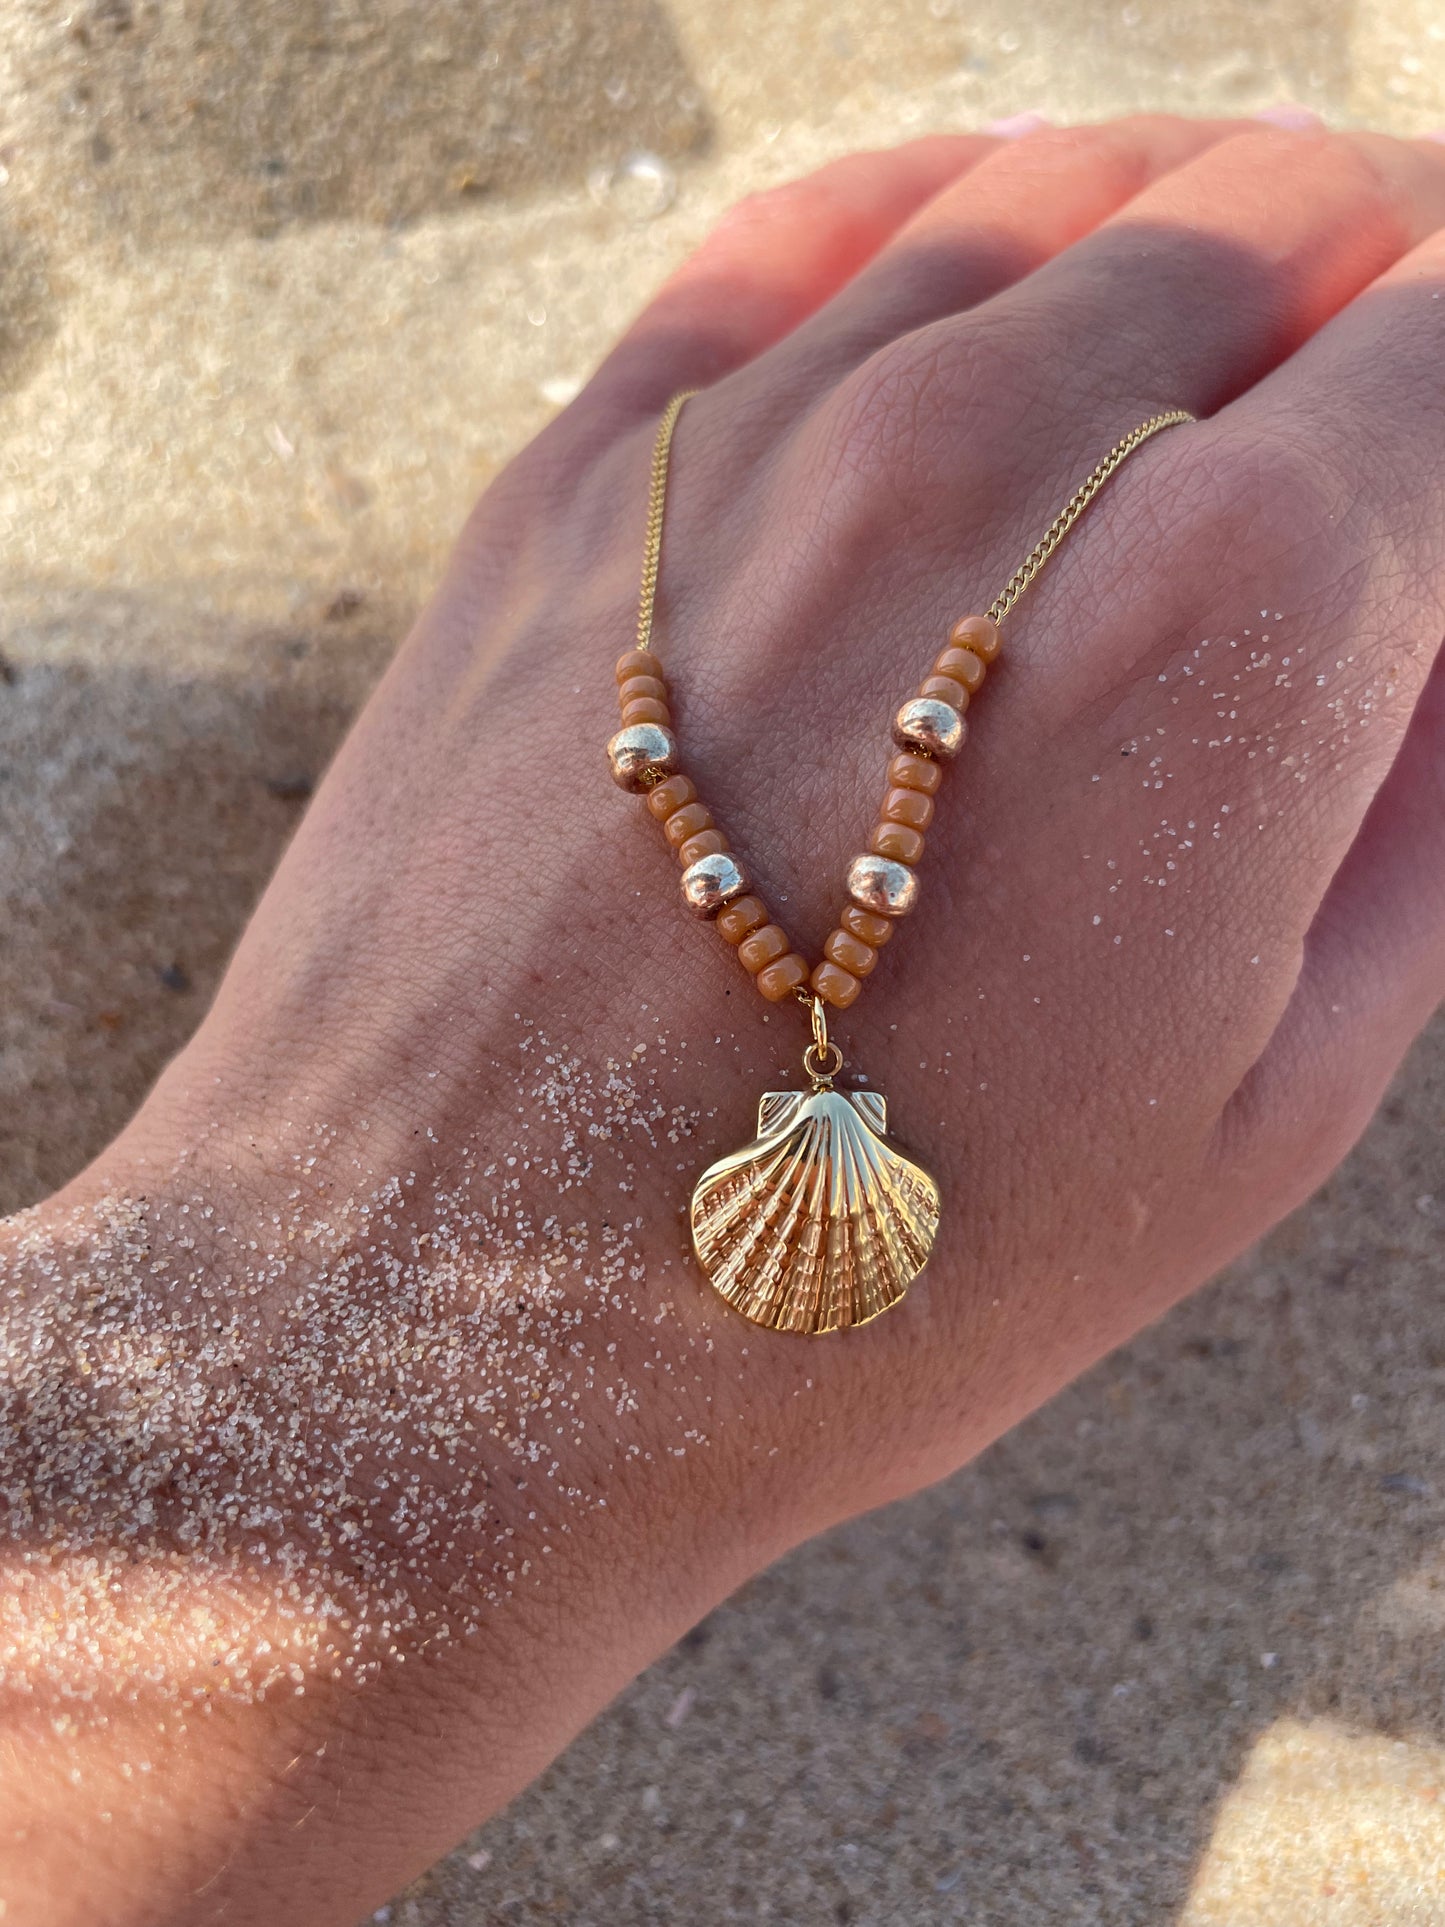 Seashell necklace tangerine